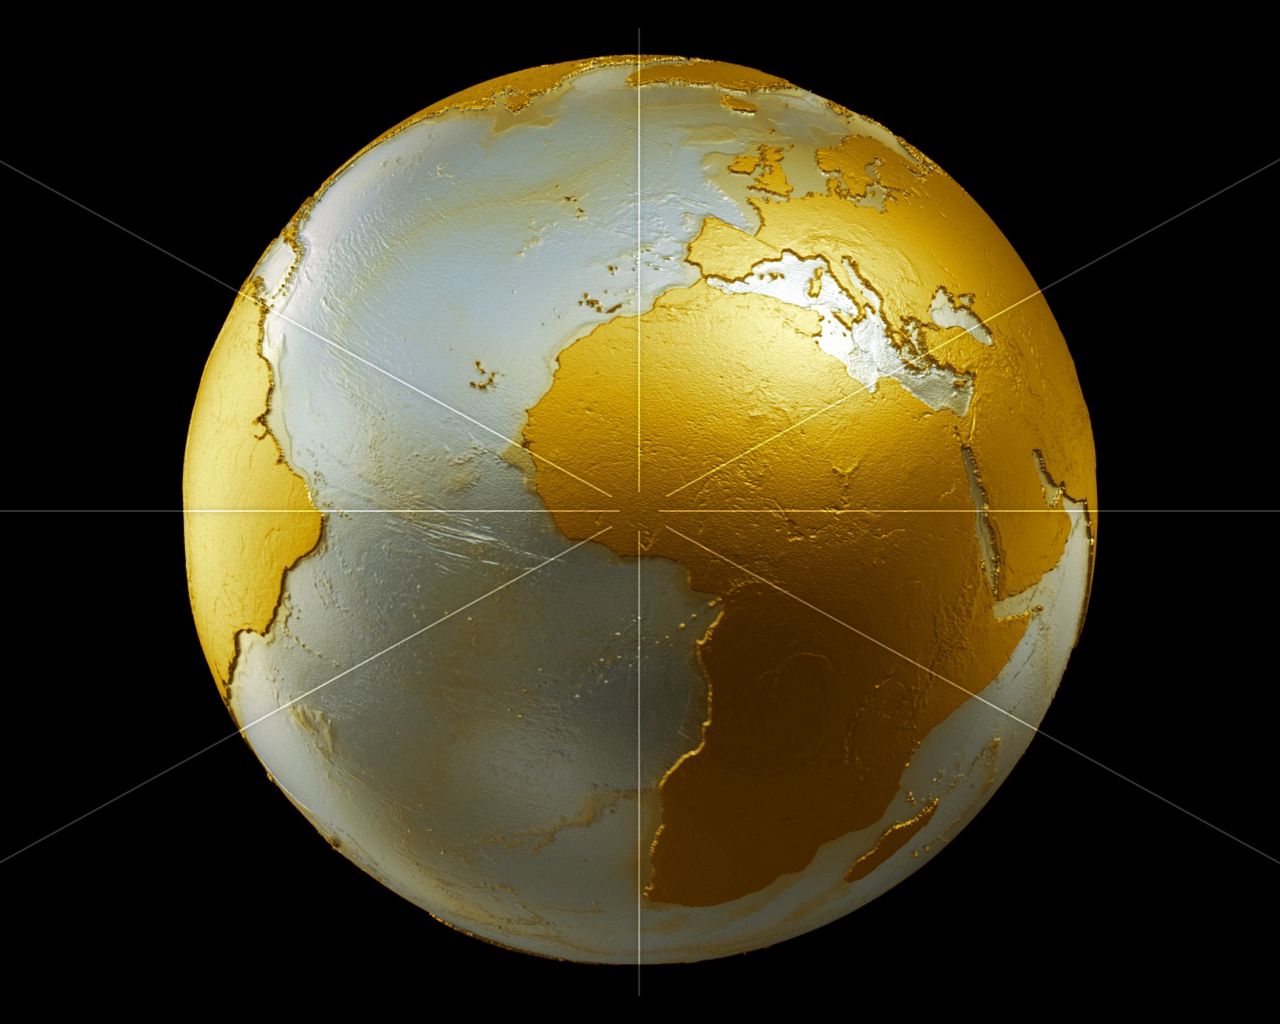 Download wallpaper 1280x1024 earth, globe, planet, gold standard 5:4 HD background